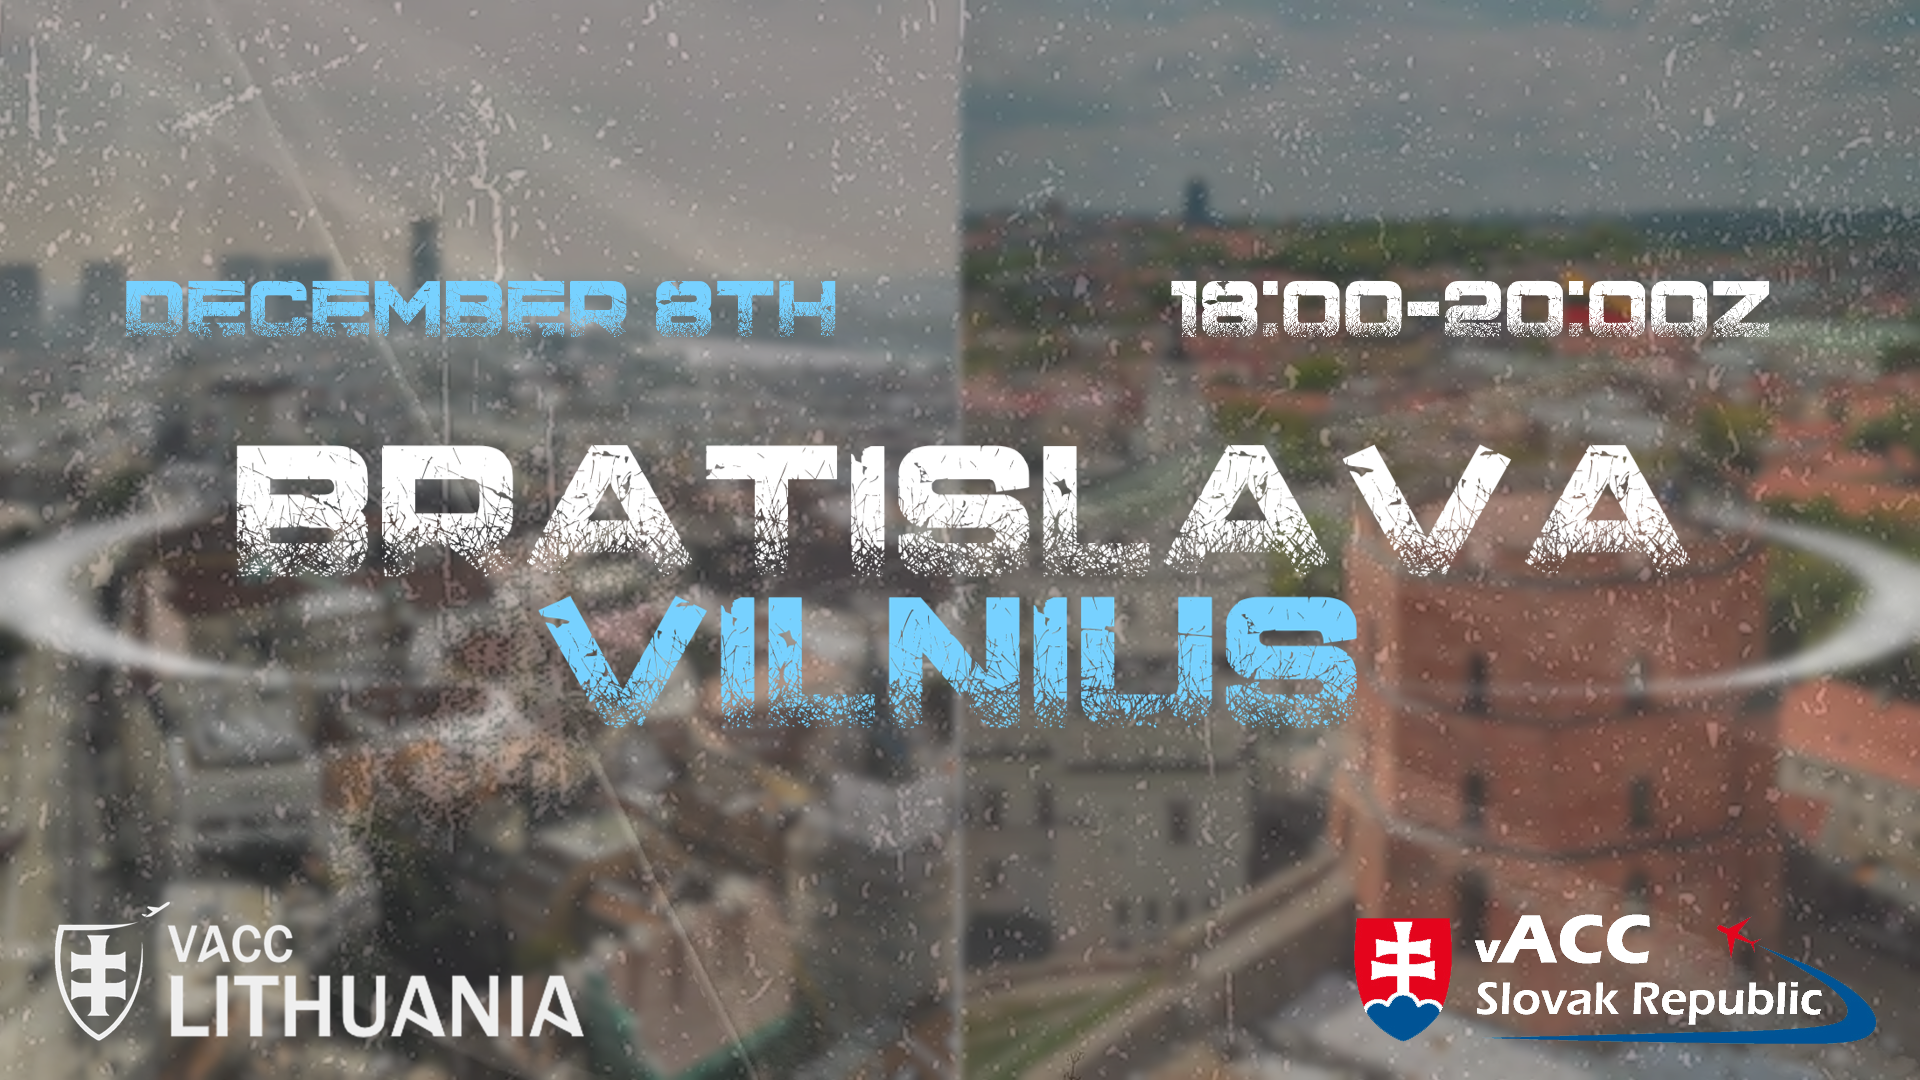 Bratislava - Vilnius Shuttle - Virtual Norwegian Events